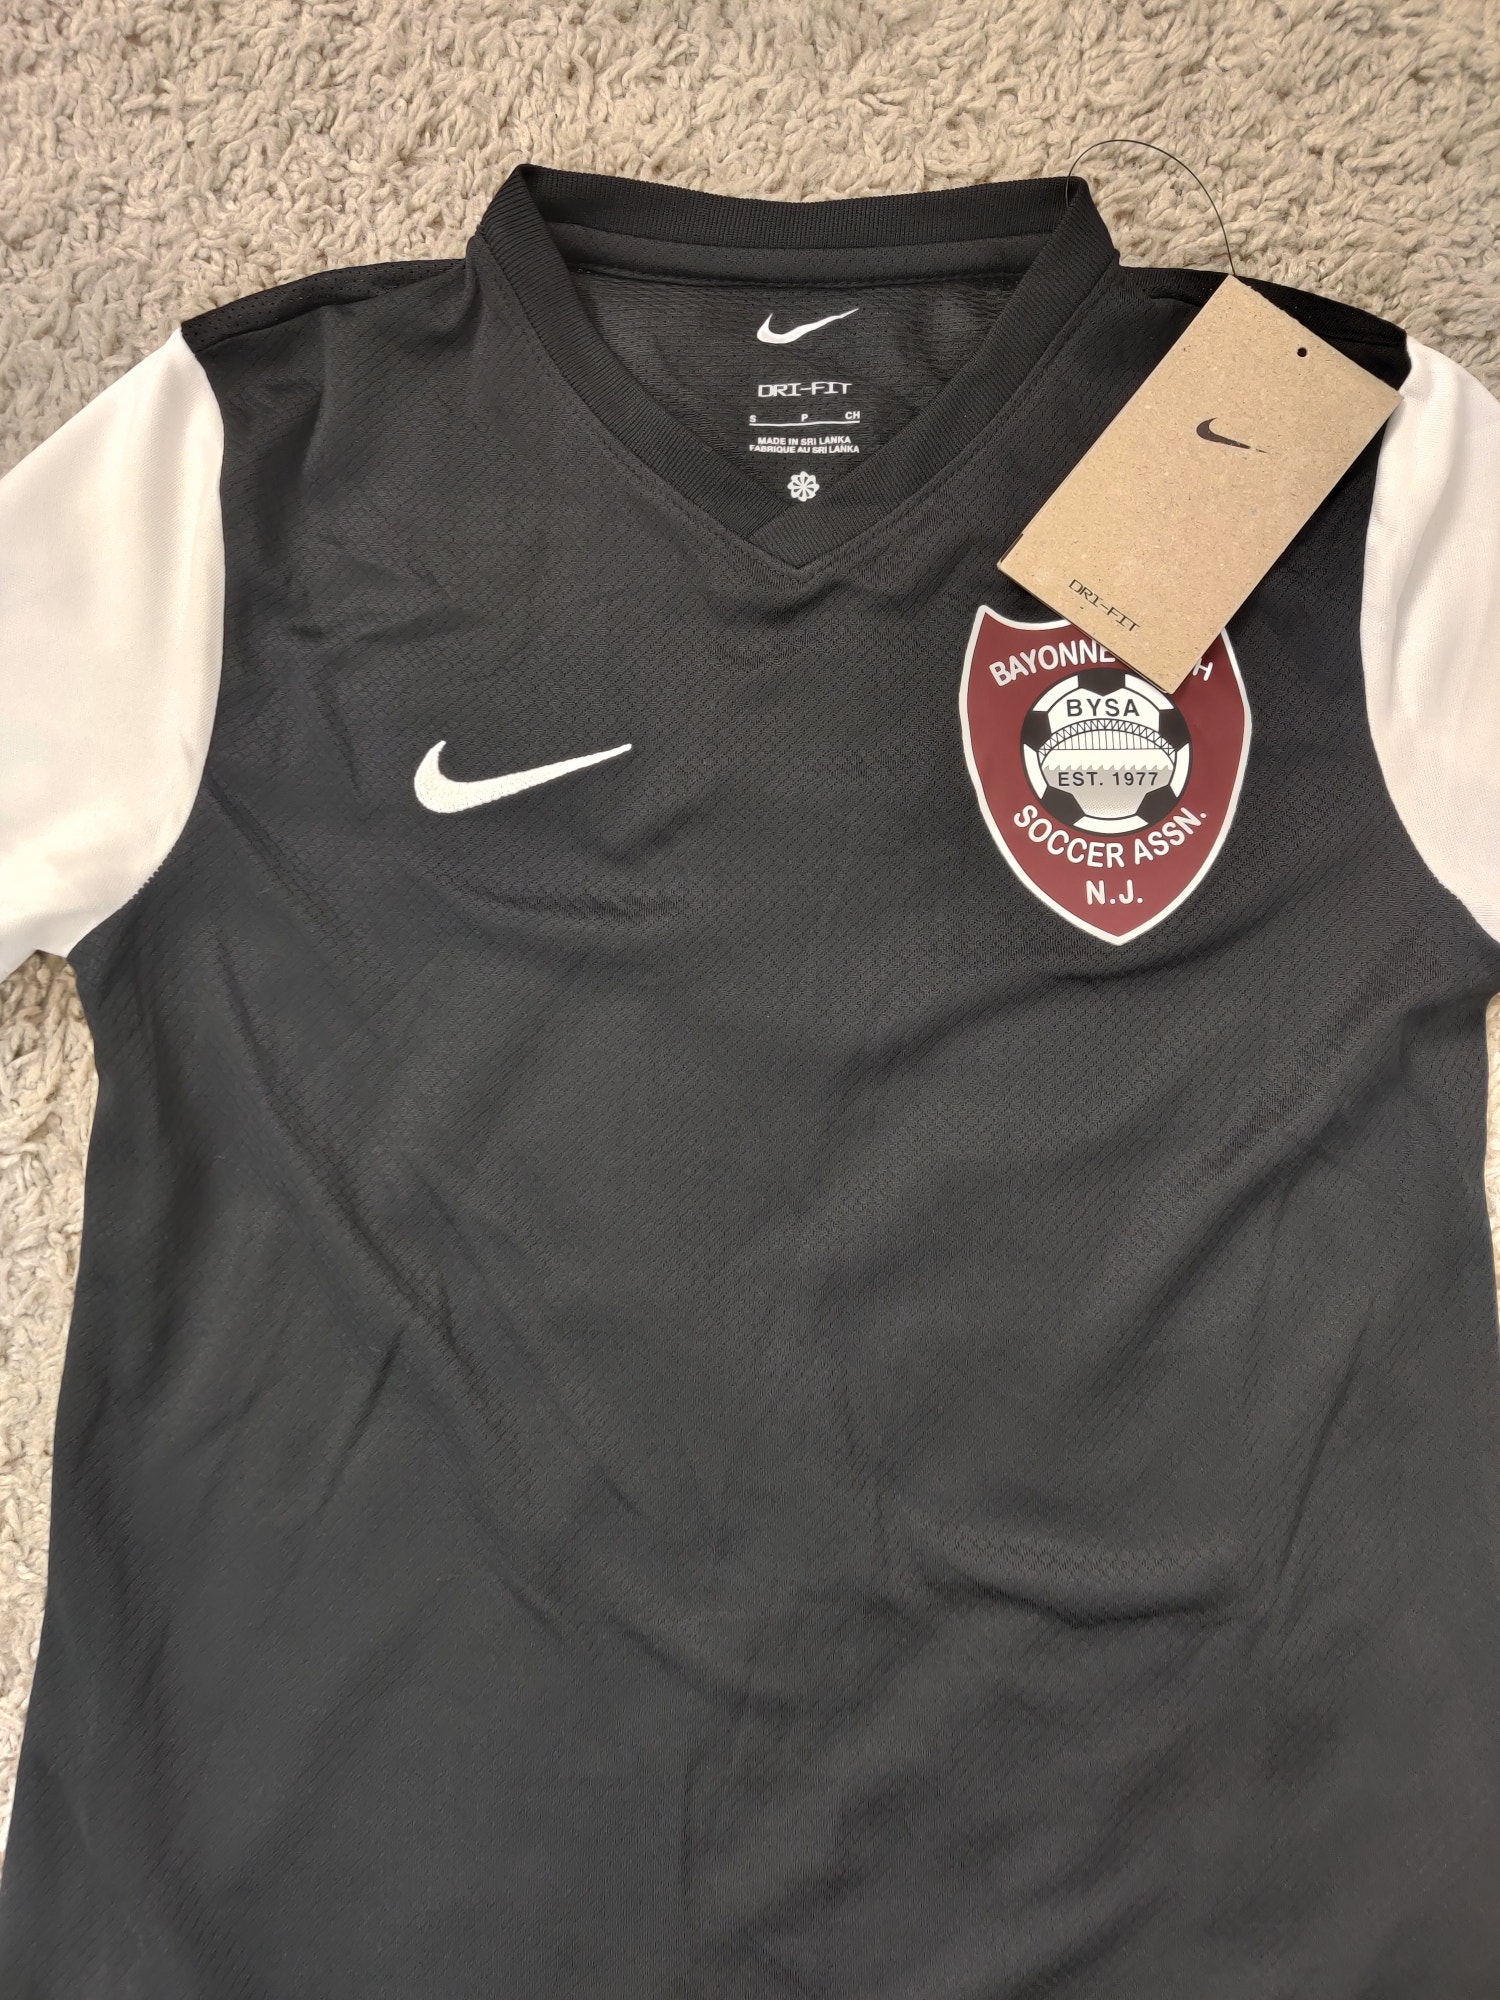 (V) NEW Nike Dri-Fit Kids shirt soccer jersey sport Seacoast United #5 sz M - Picture 4 of 9